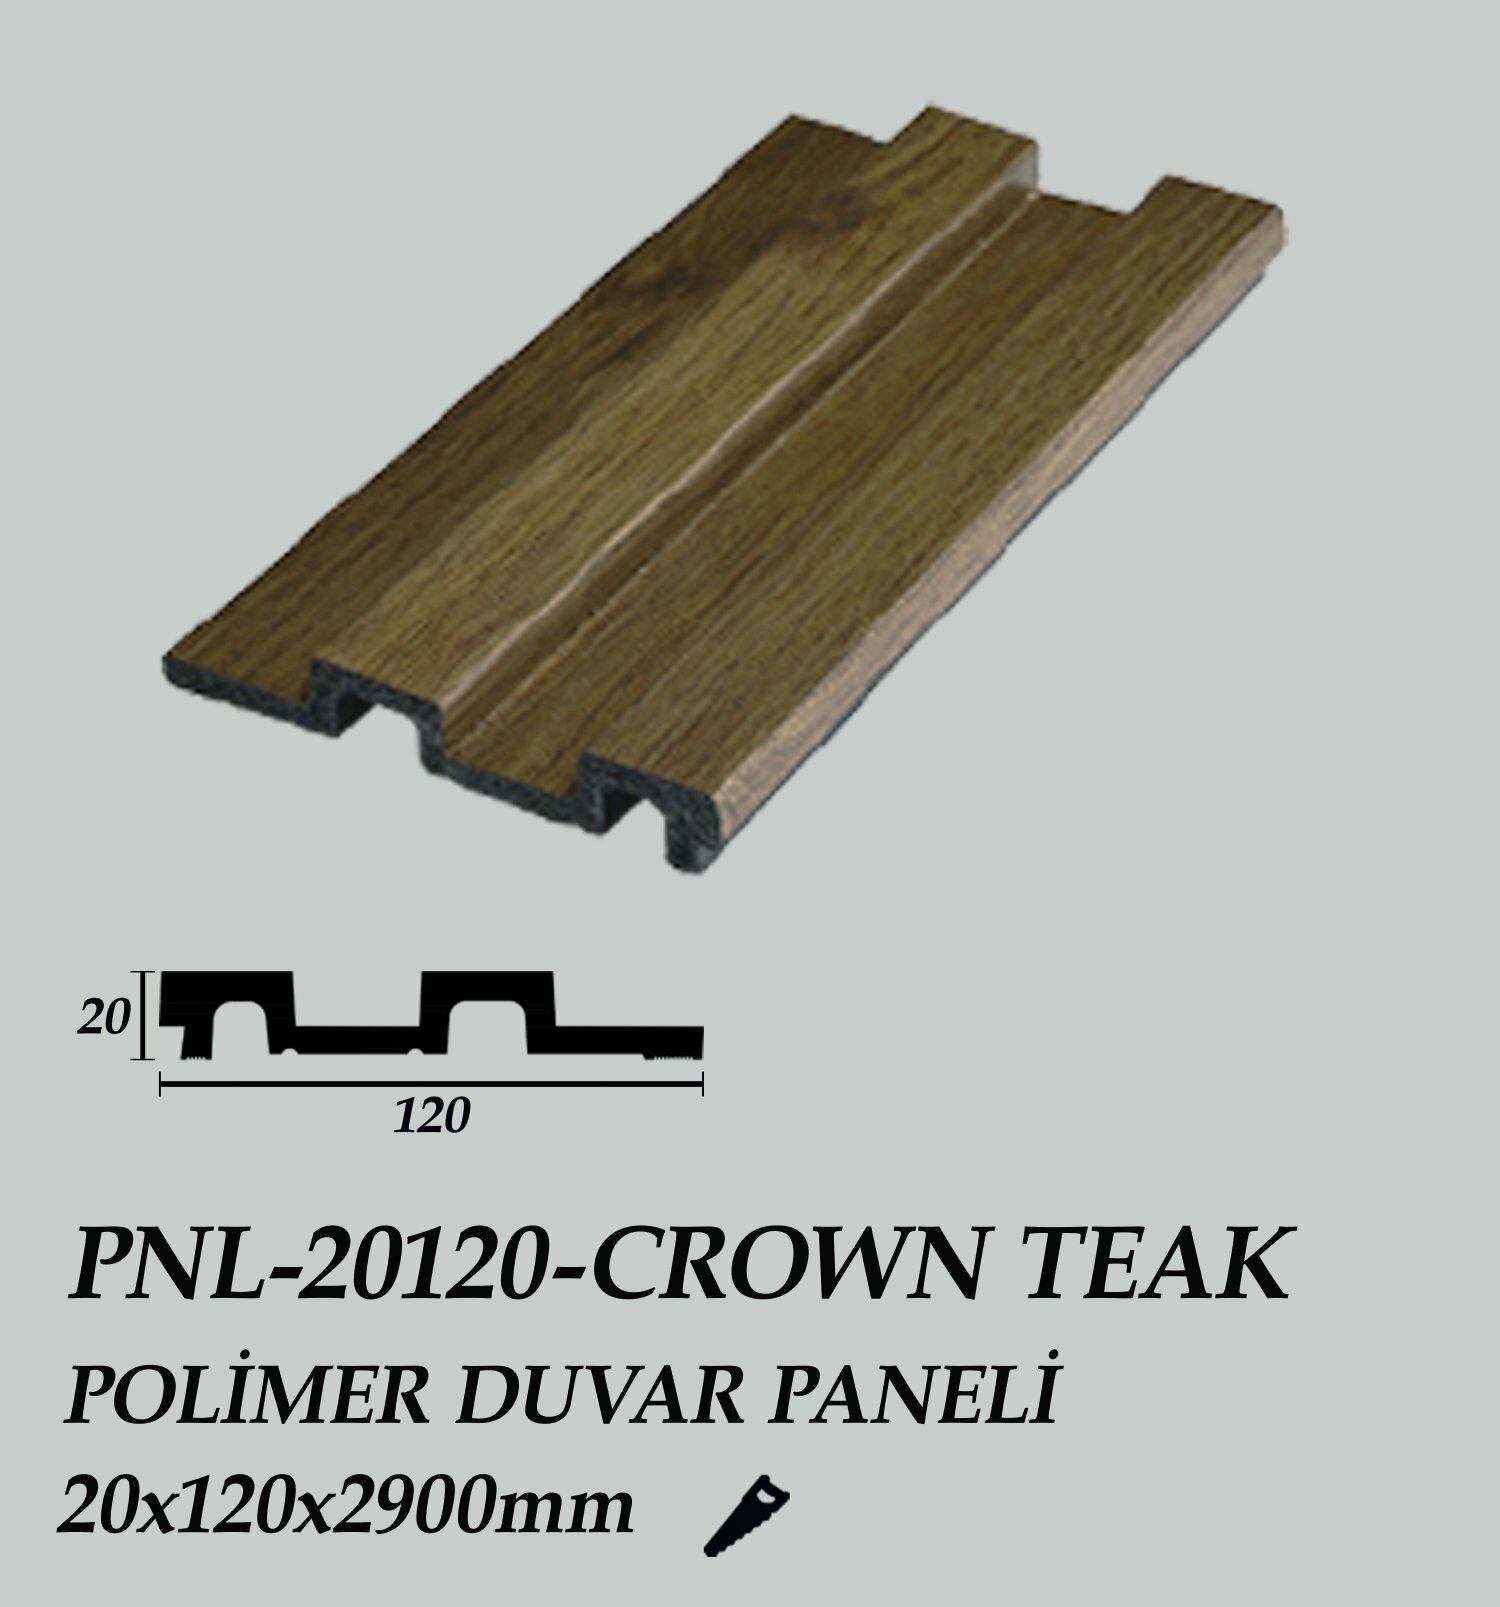 PNL-20120-CROWN TEAK Polimer Duvar Paneli 20X120X2900mm